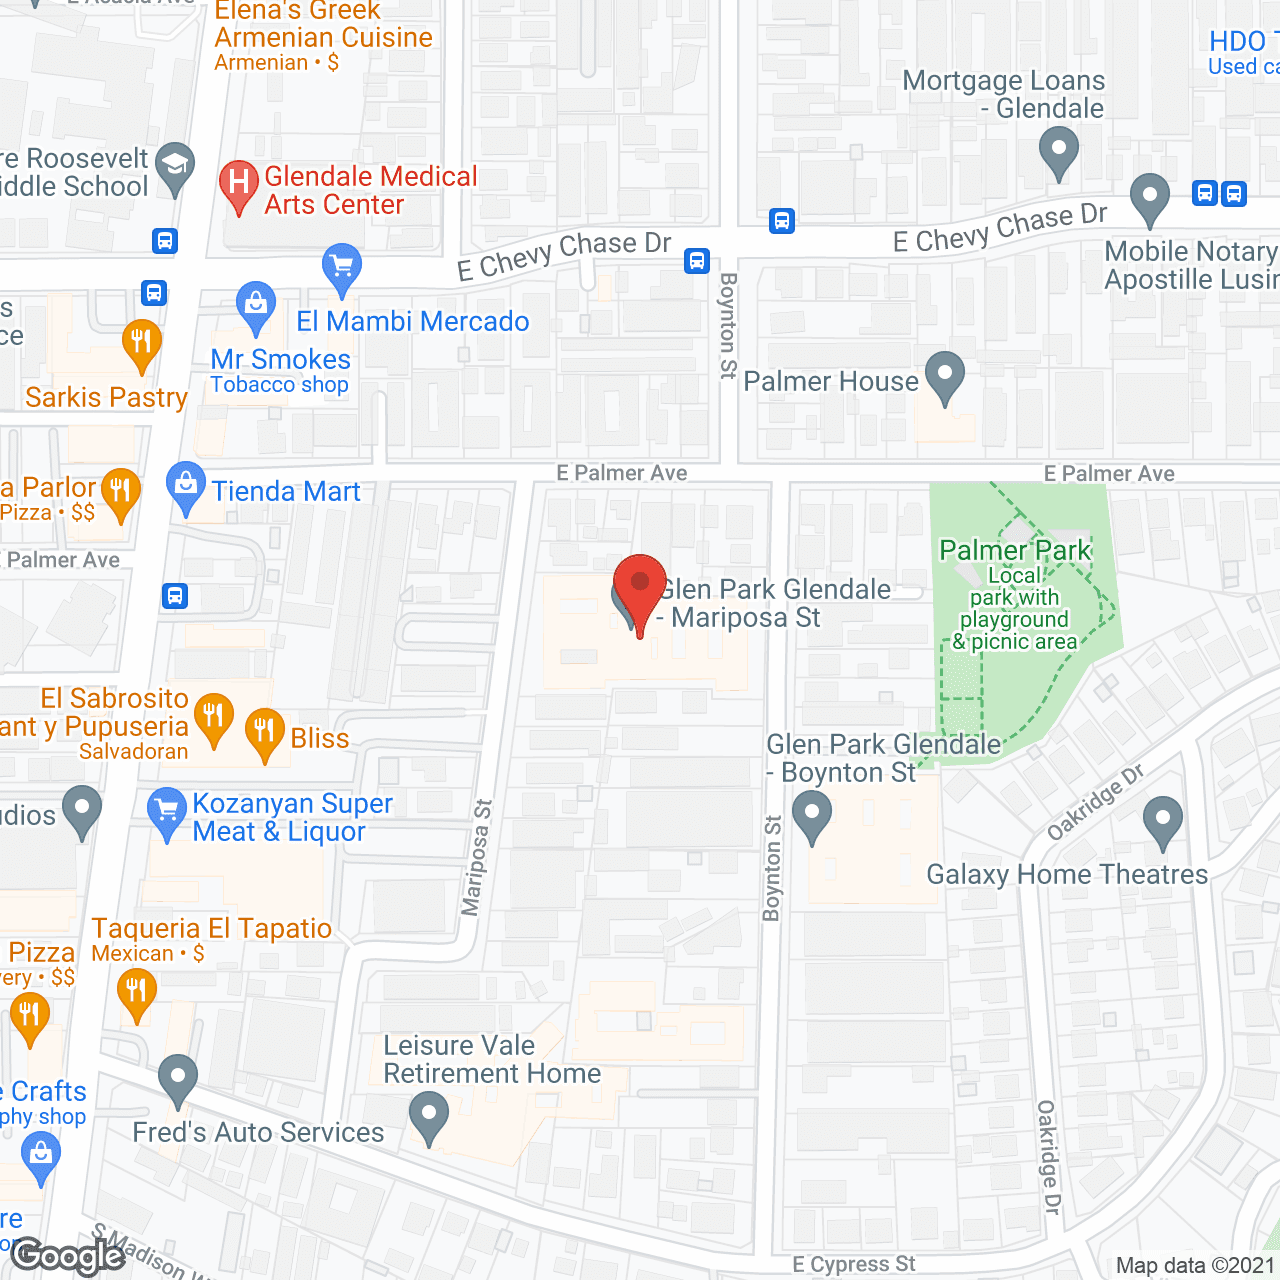 Glen Park at Glendale - Mariposa St in google map